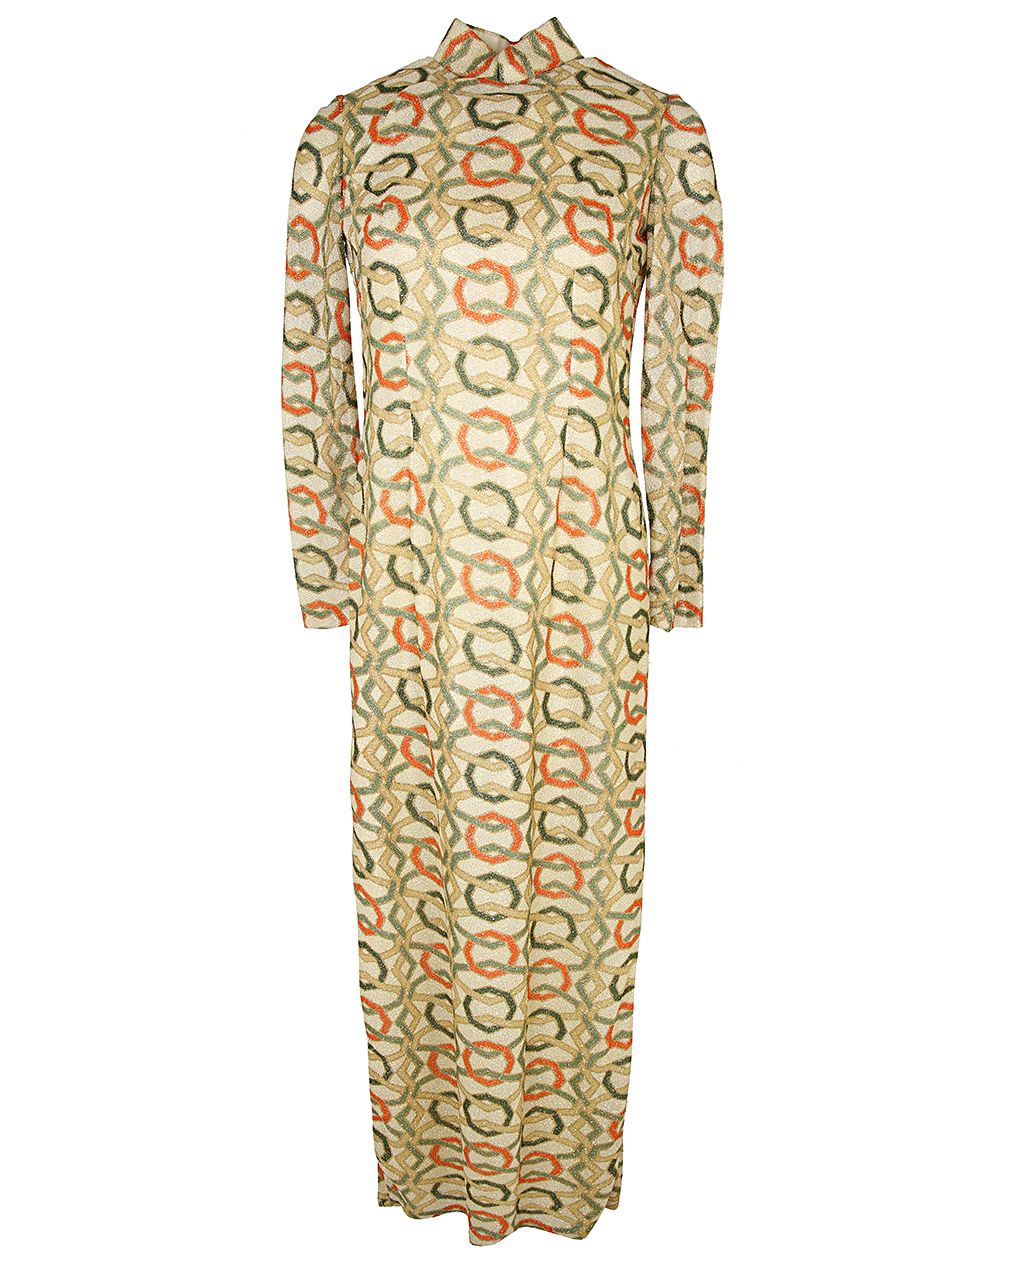 70s Gold Cheongsam Dress With Circular Pattern